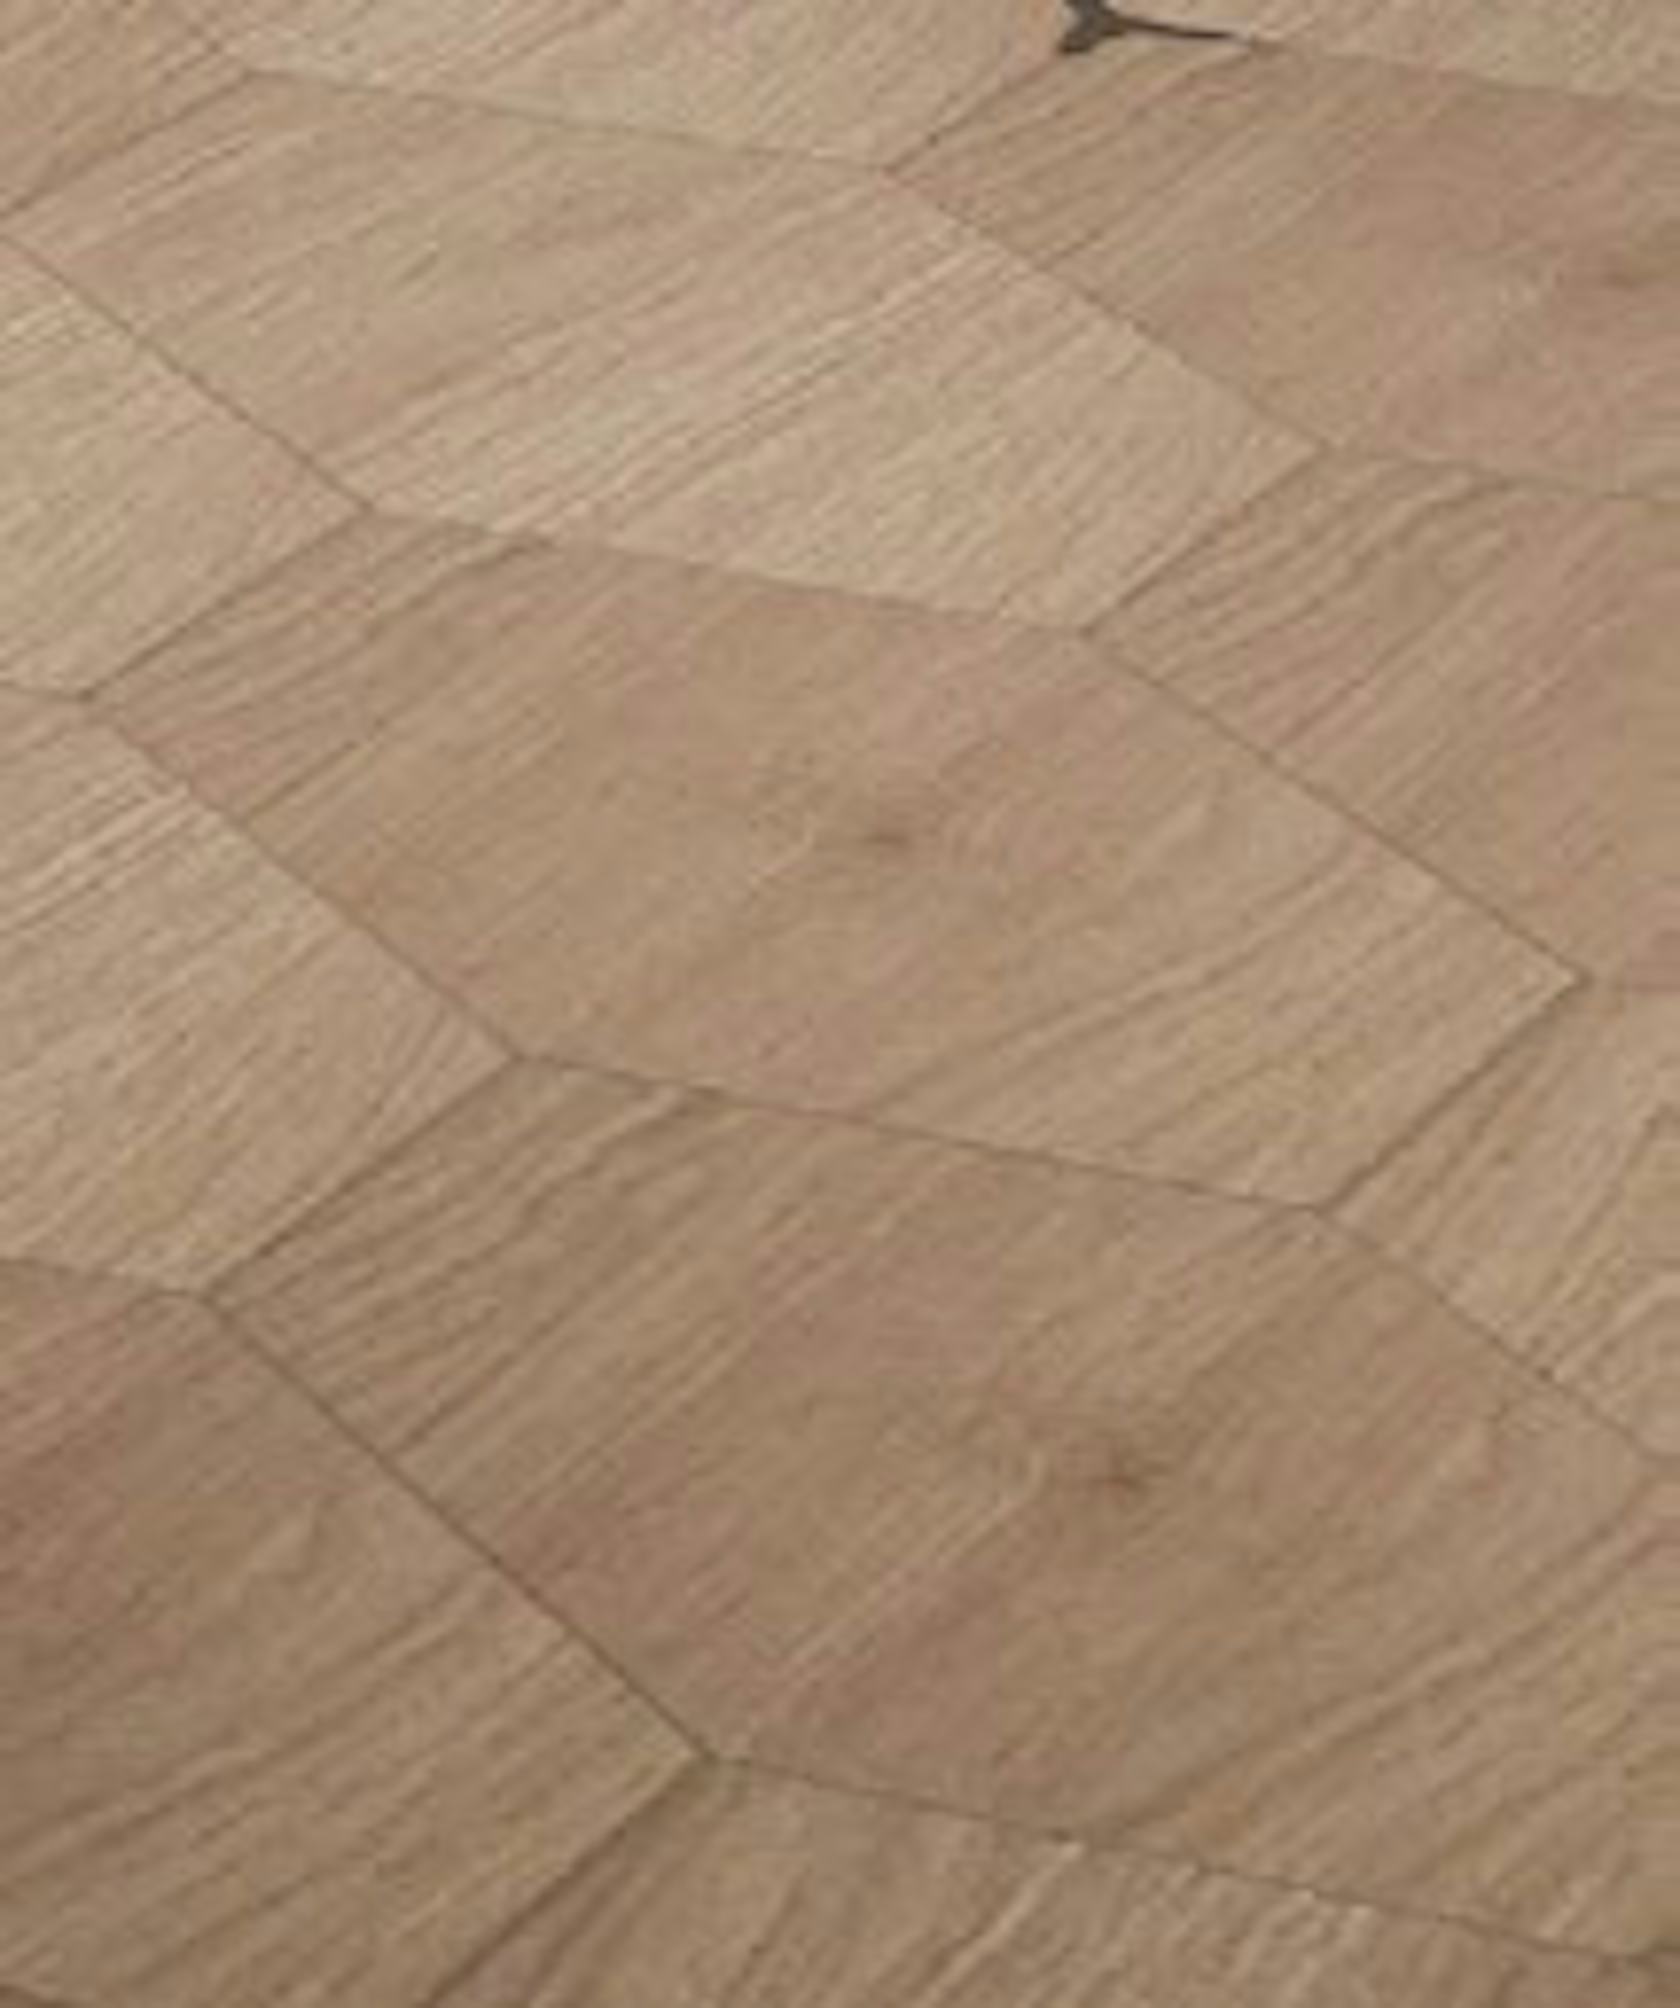 floor flooring wood plywood texture indoors interior design home decor